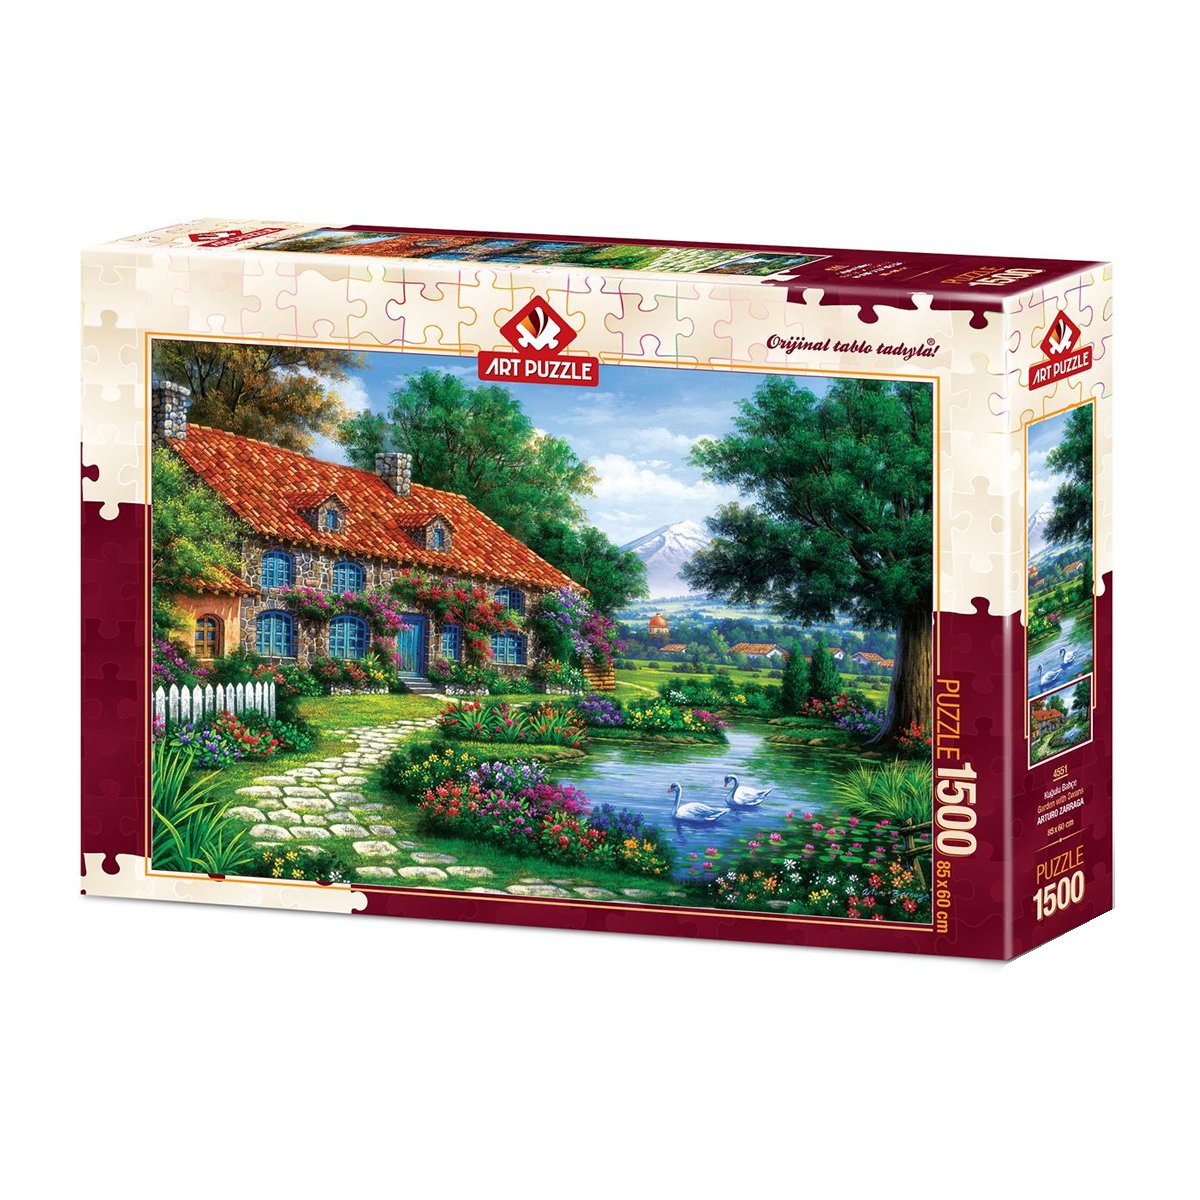 4551 Art Puzzle Kuğulu Bahçe 1500 parça Puzzle / +15 yaş